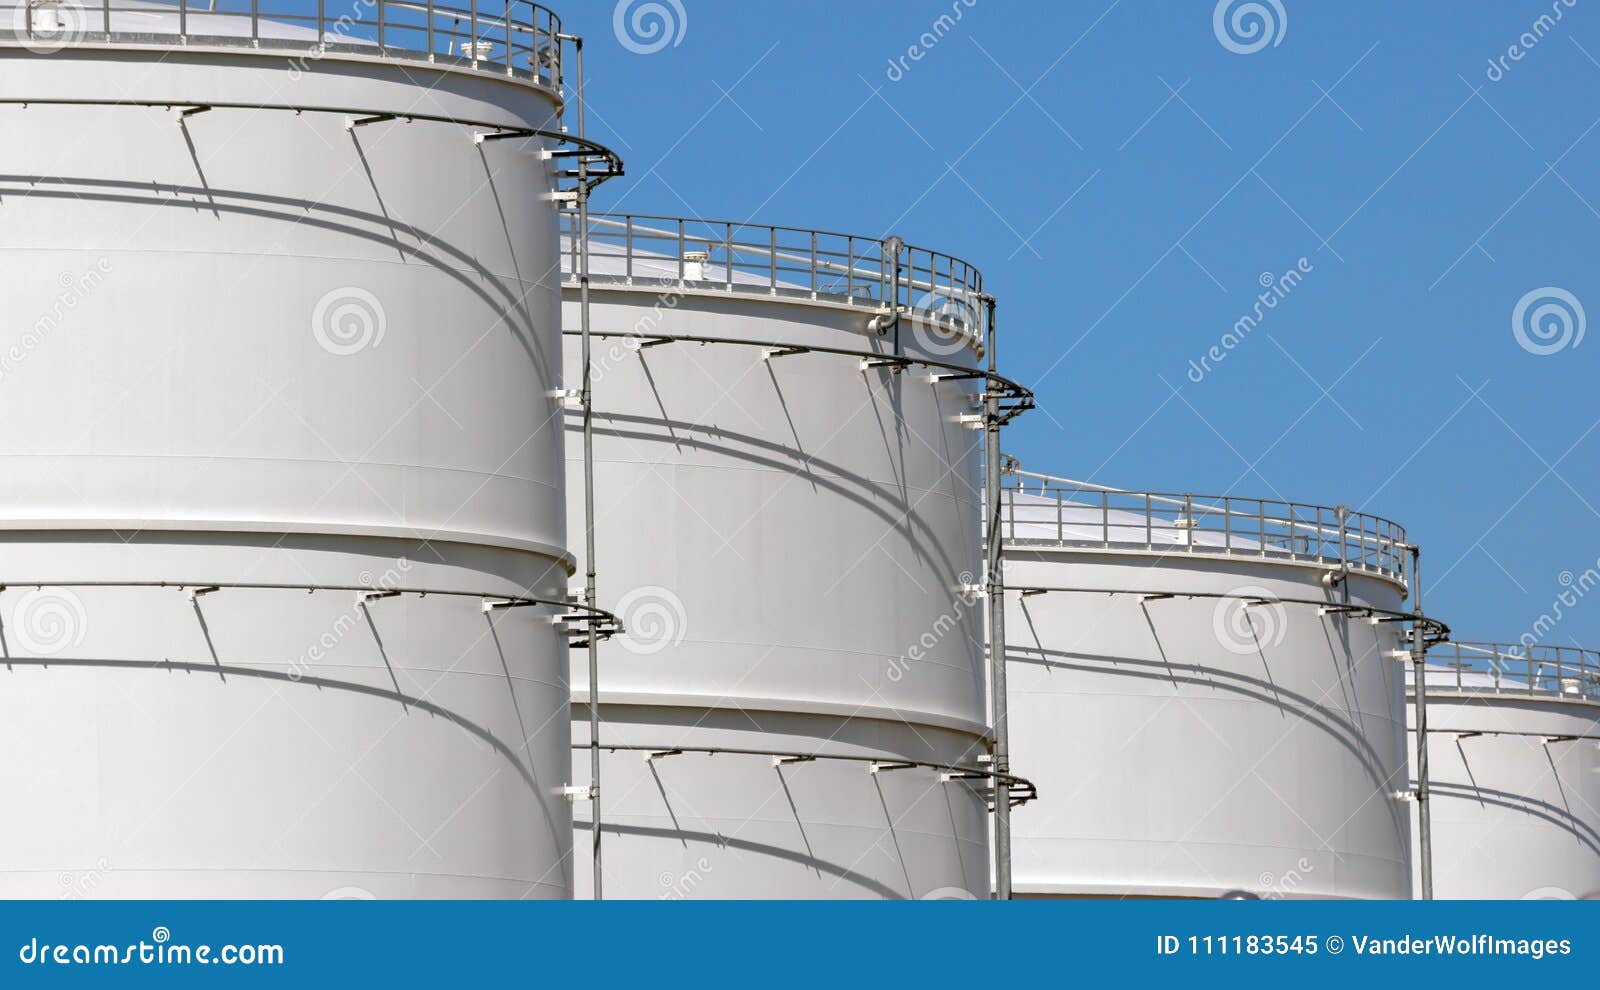 row of oil storage tanks